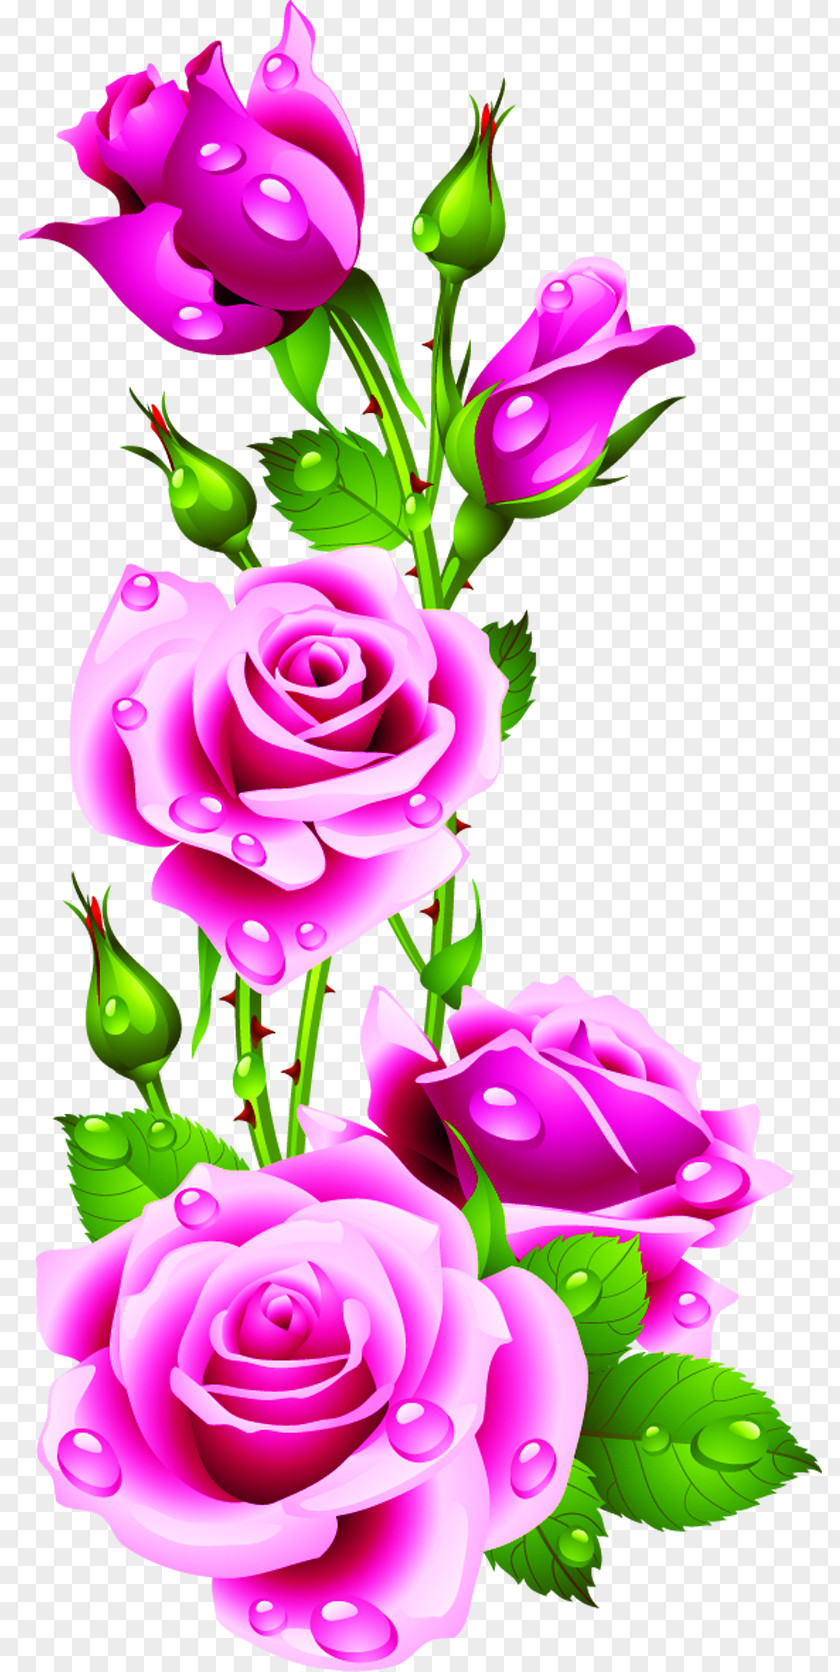 Water Drops Rose Petals Pink Flowers Clip Art PNG